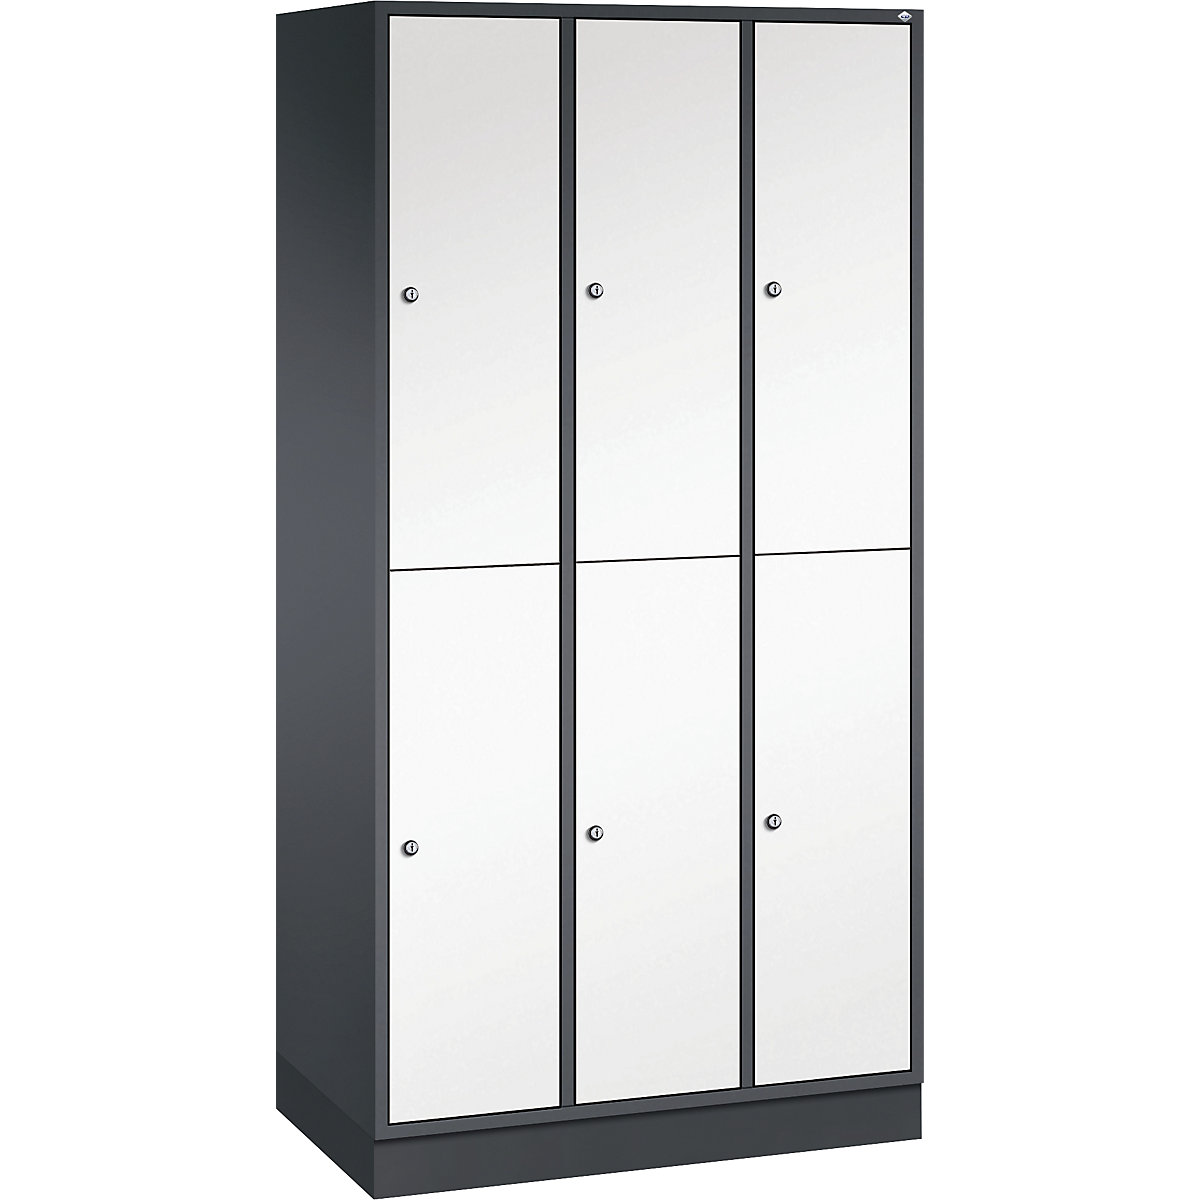 INTRO double tier steel cloakroom locker – C+P, WxD 920 x 500 mm, 6 compartments, black grey body, pure white doors